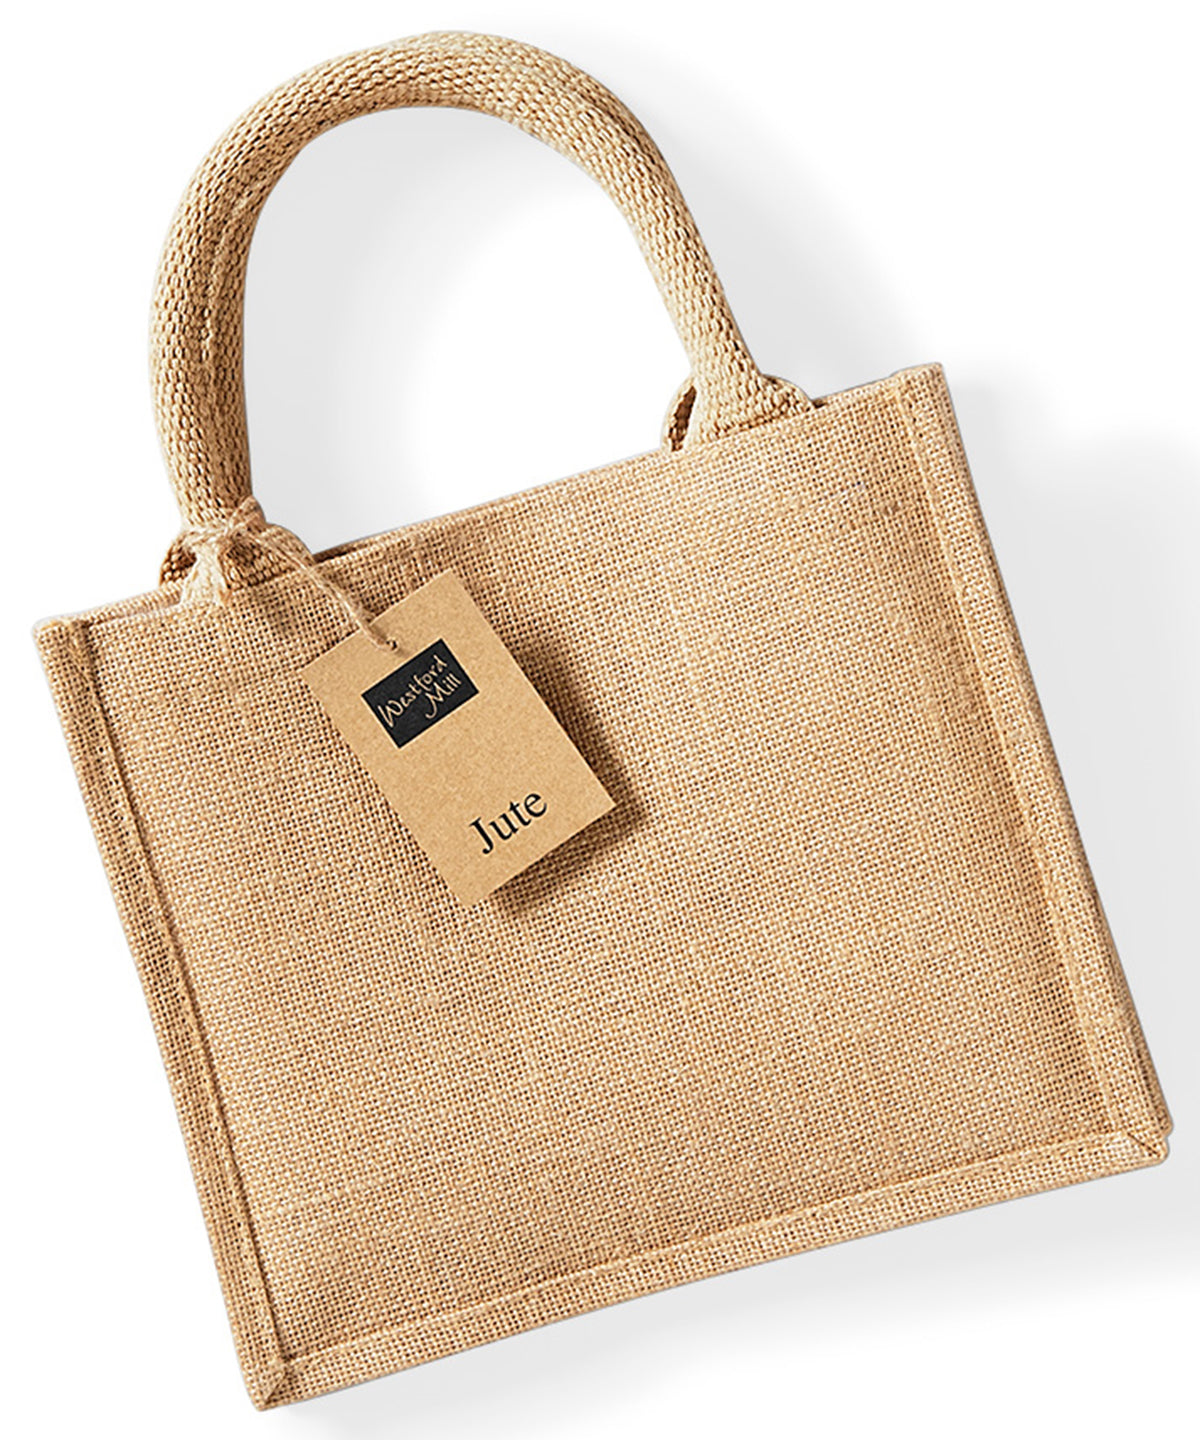 Jute Bag For Ladies Manufacturer - FL 010 E 